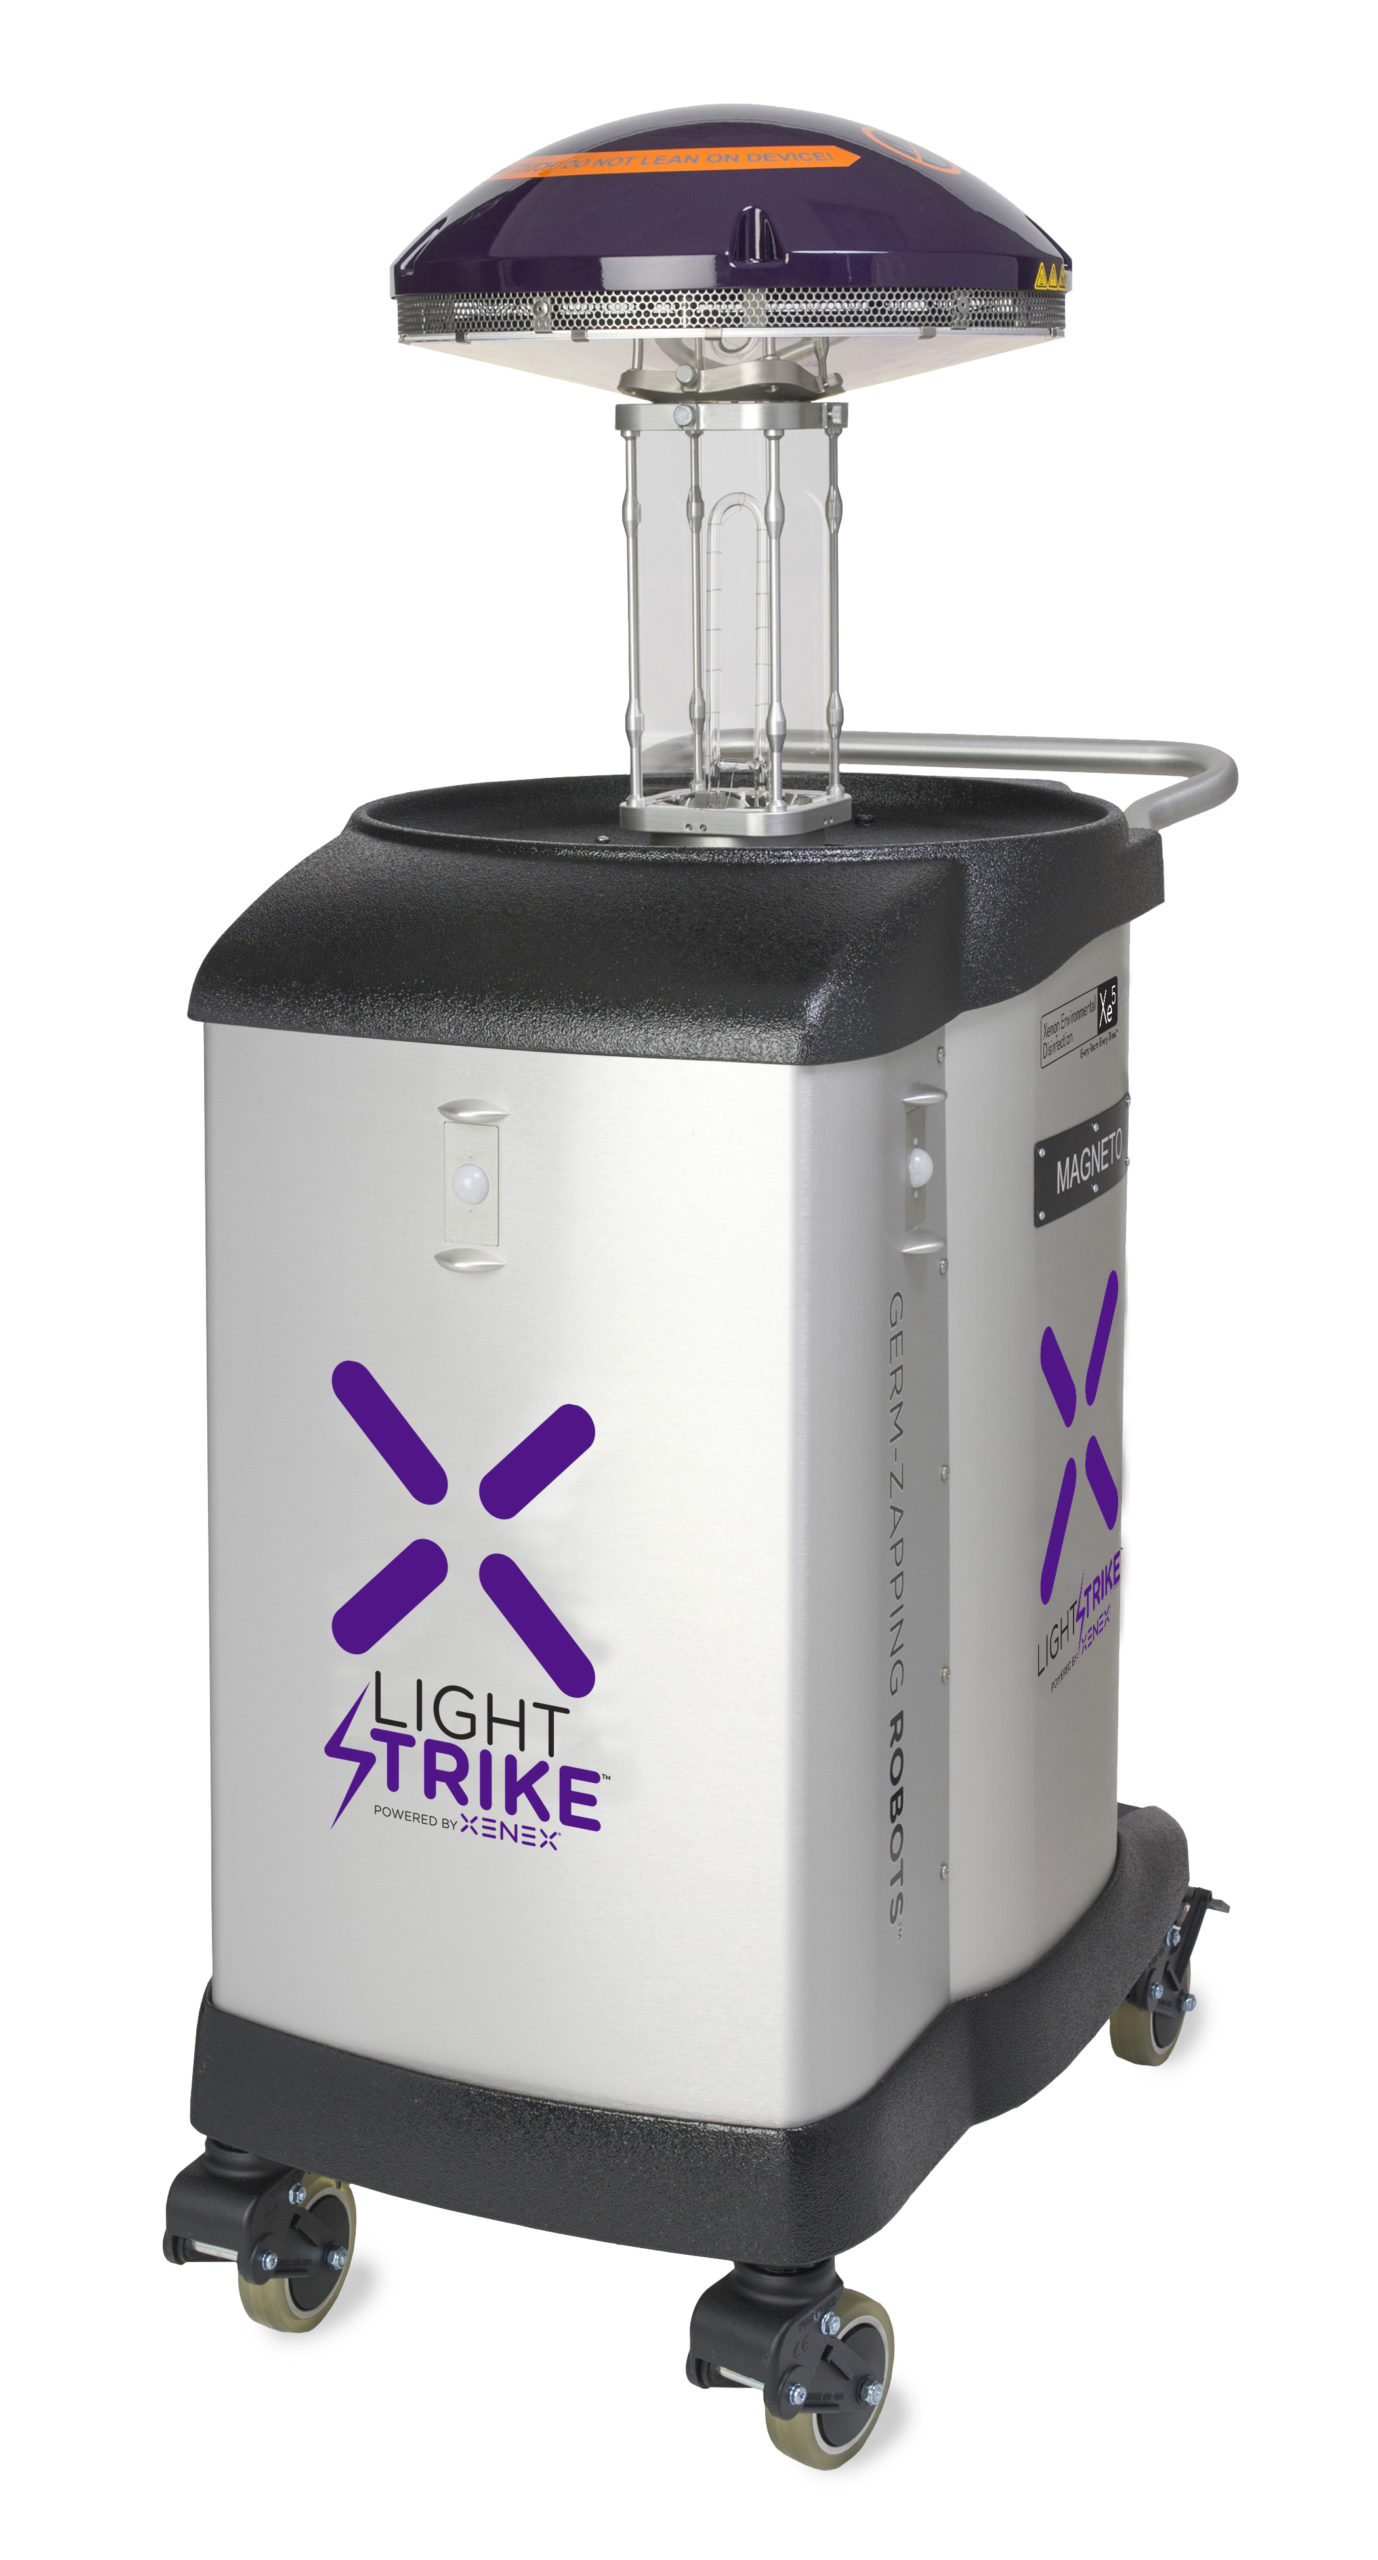 X4 LightStrike Robot